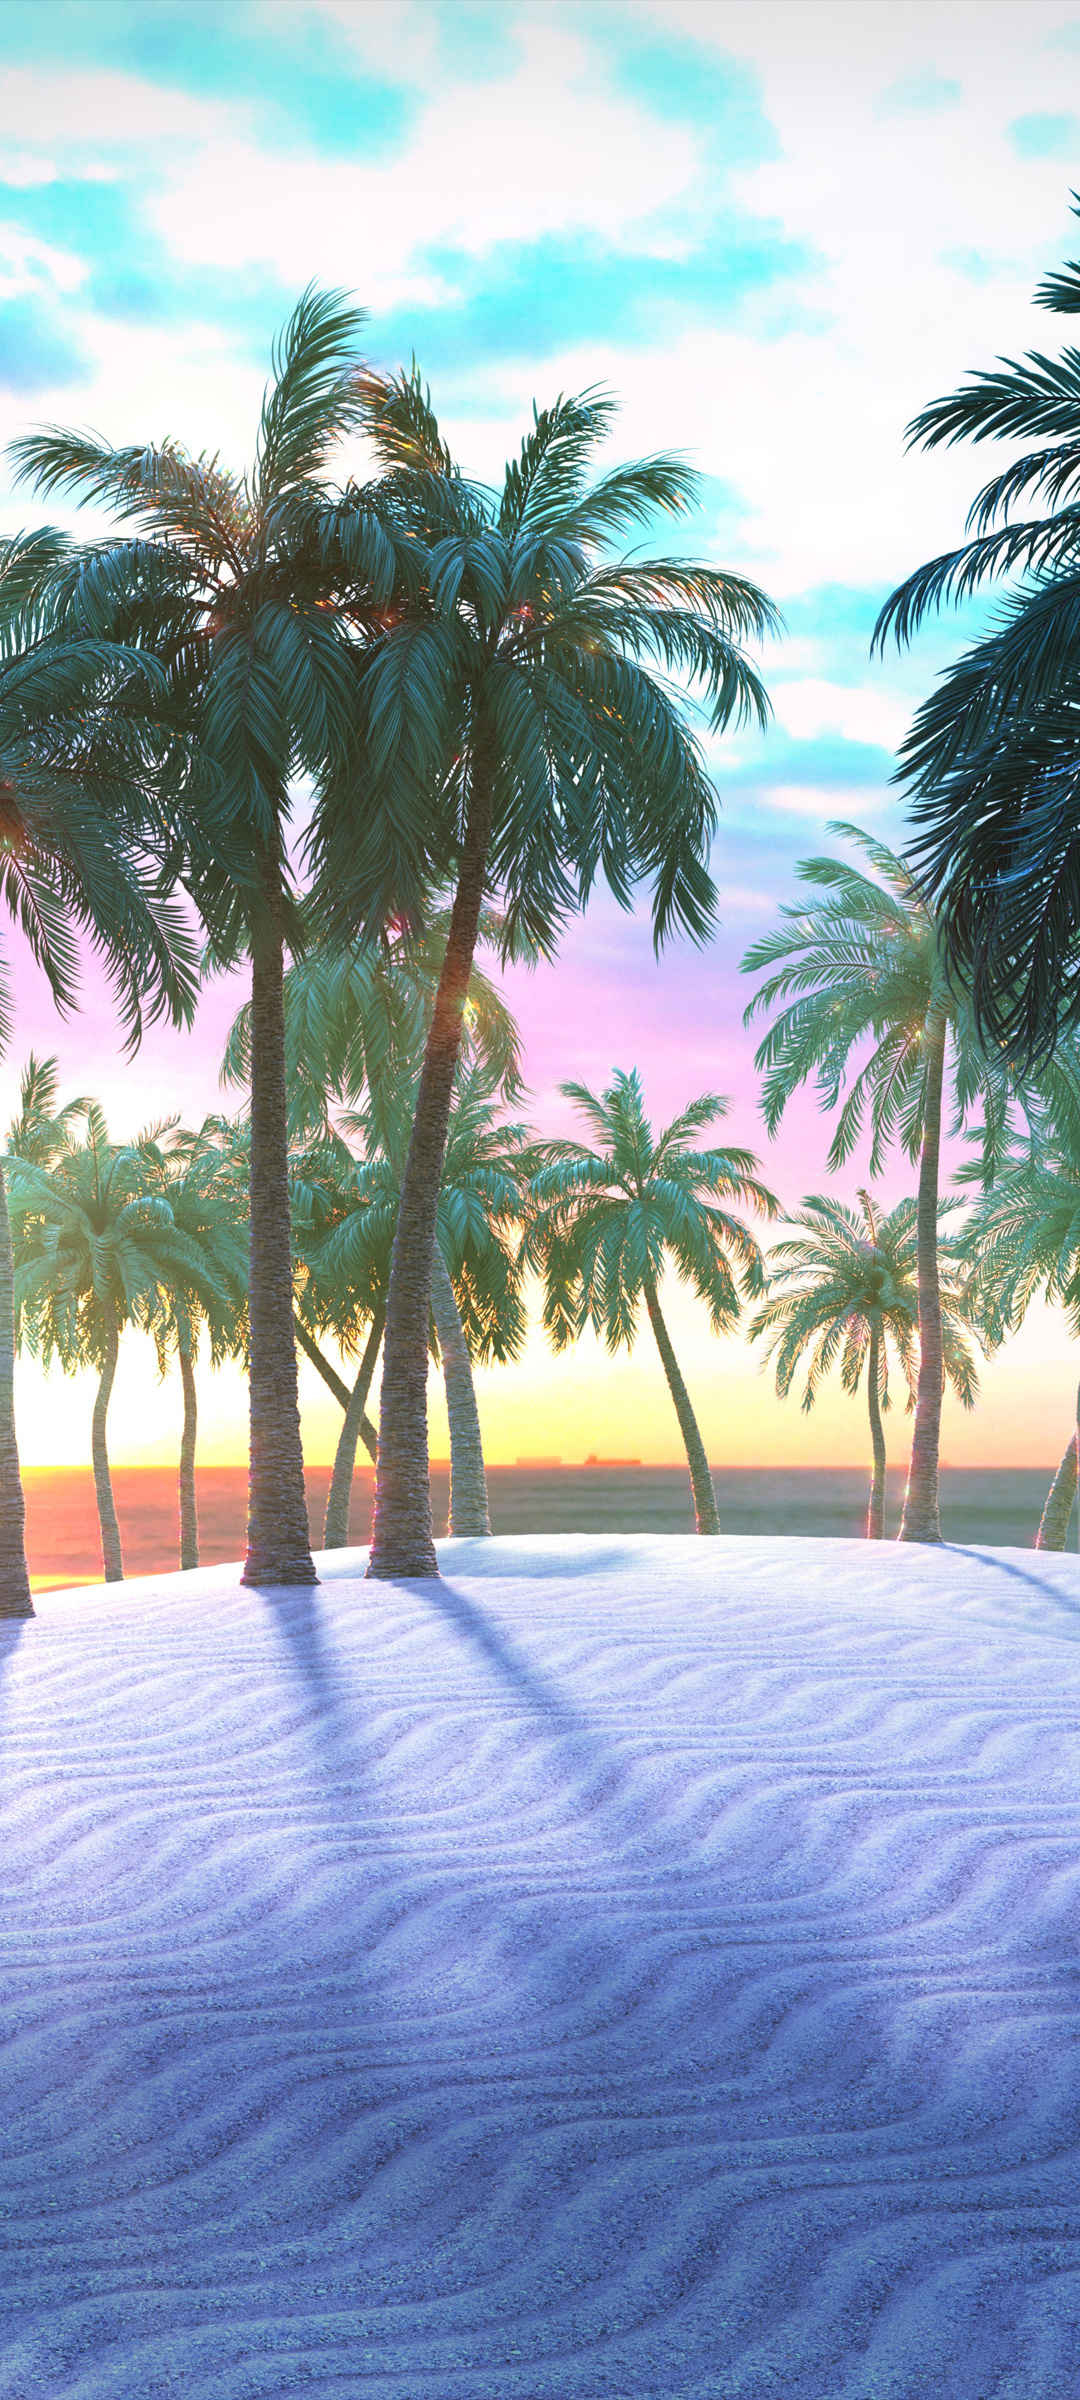 椰子树风景手机壁纸图片-